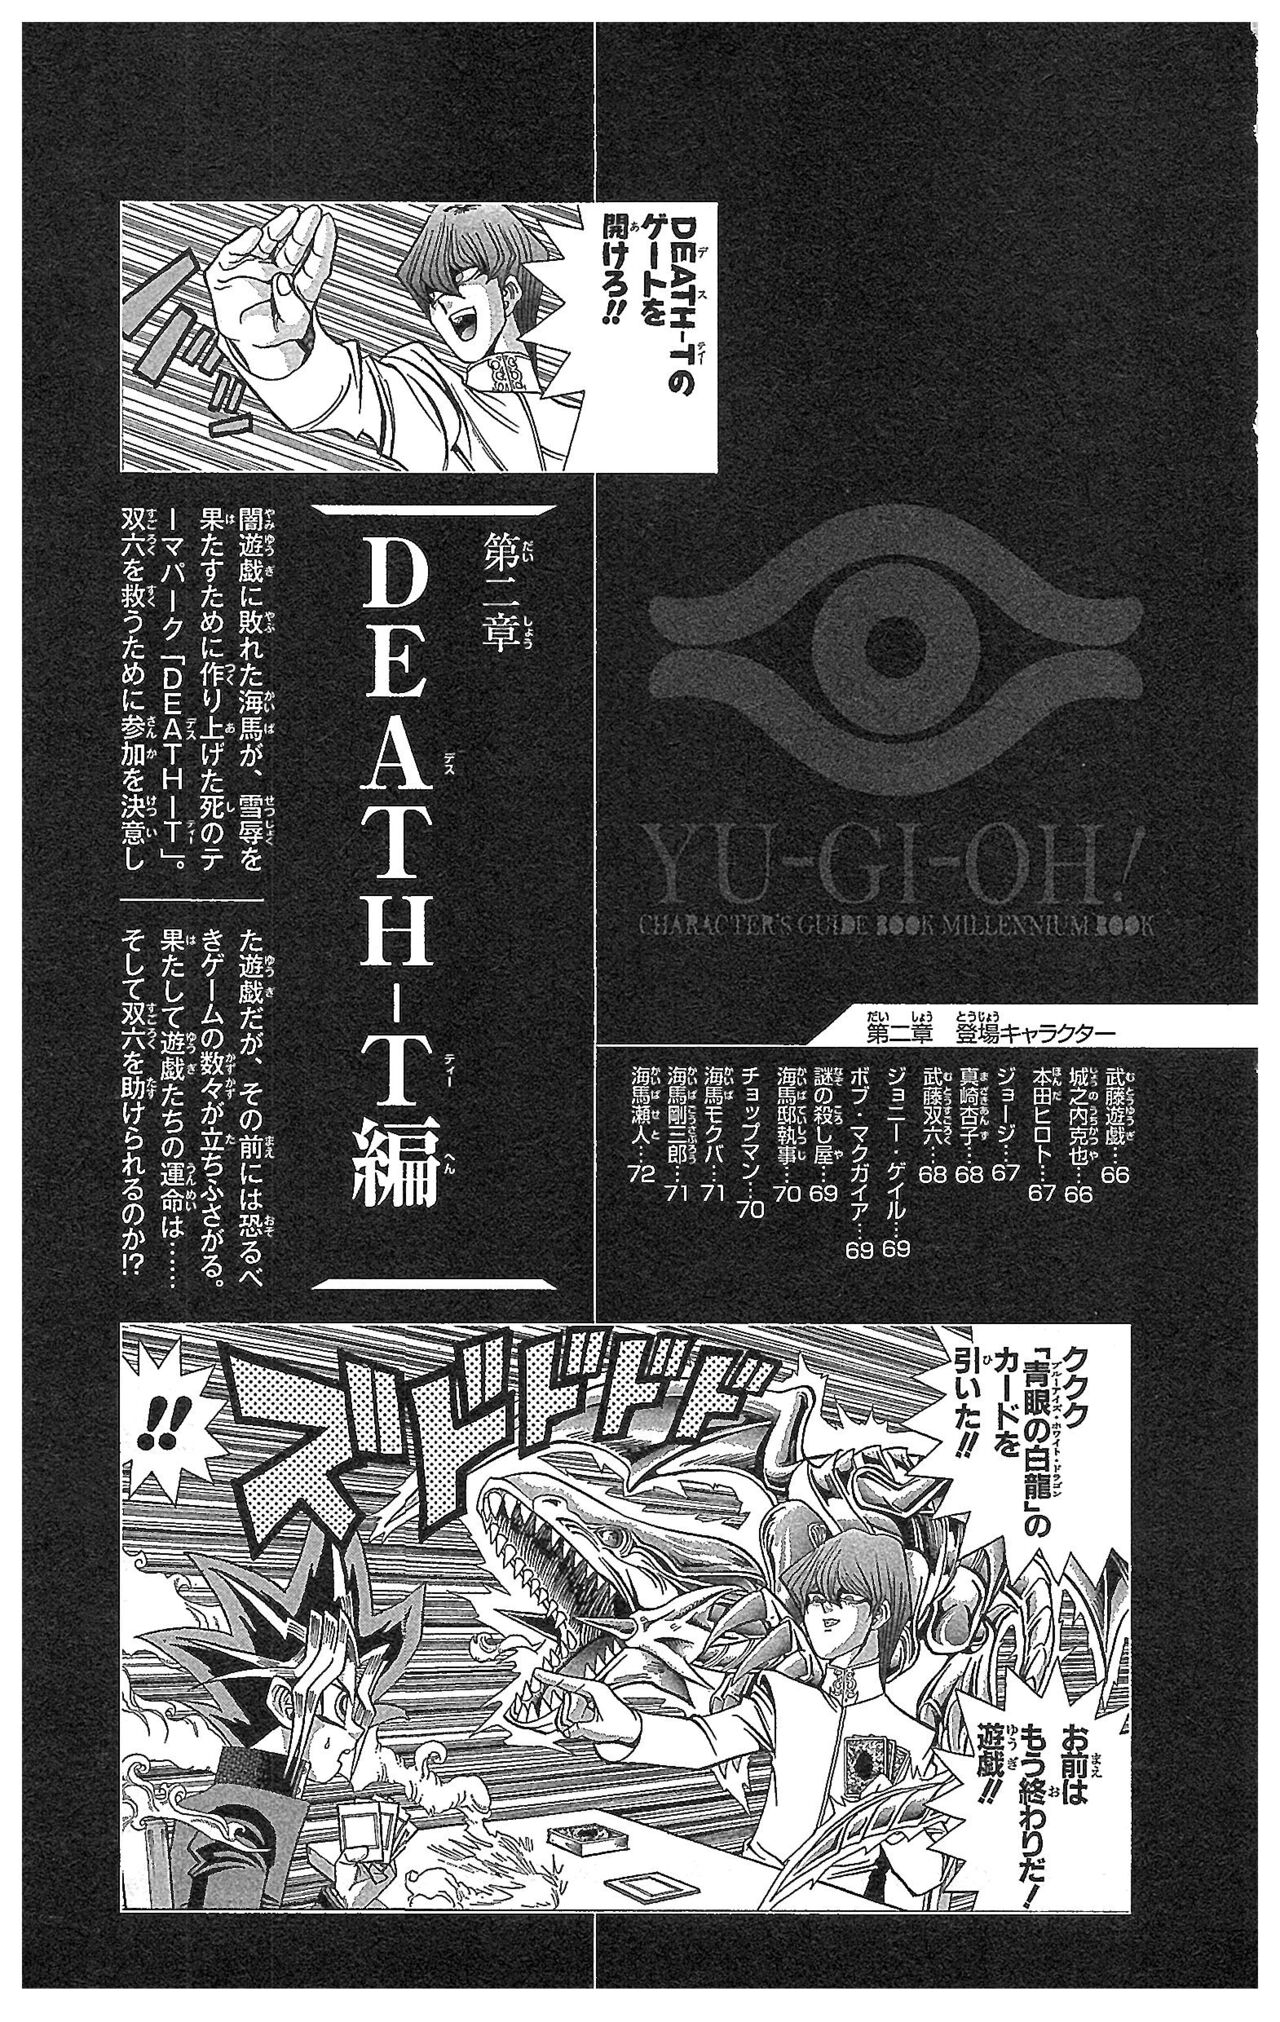 Yu-Gi-Oh! Character Guidebook: Millennium Book 59